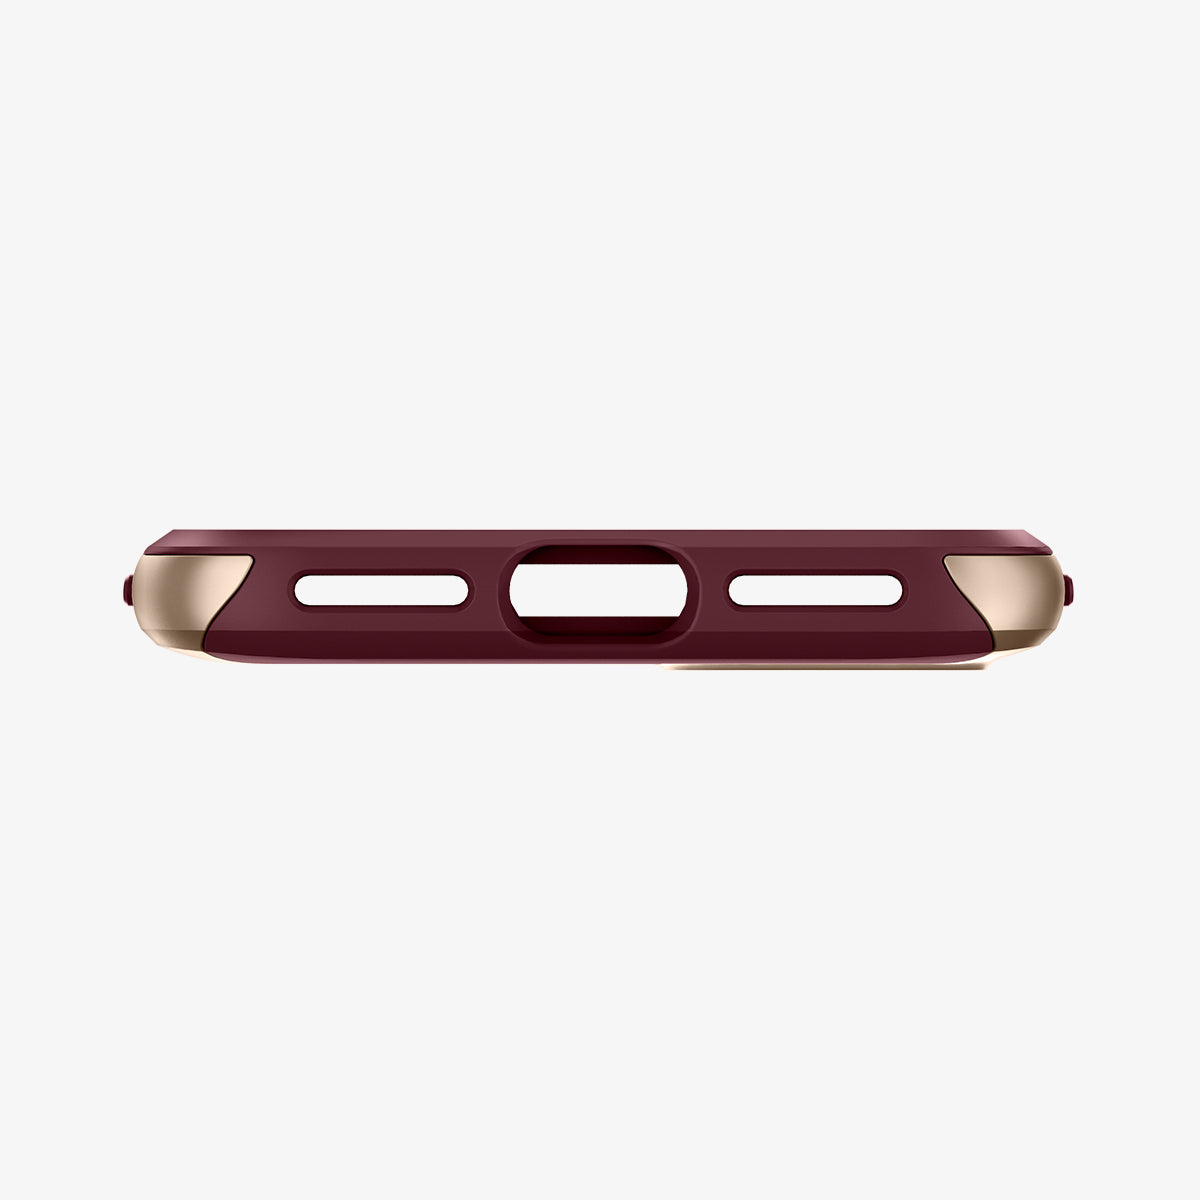 054CS22198 - iPhone SE Neo Hybrid Herringbone case in burgundy showing the bottom